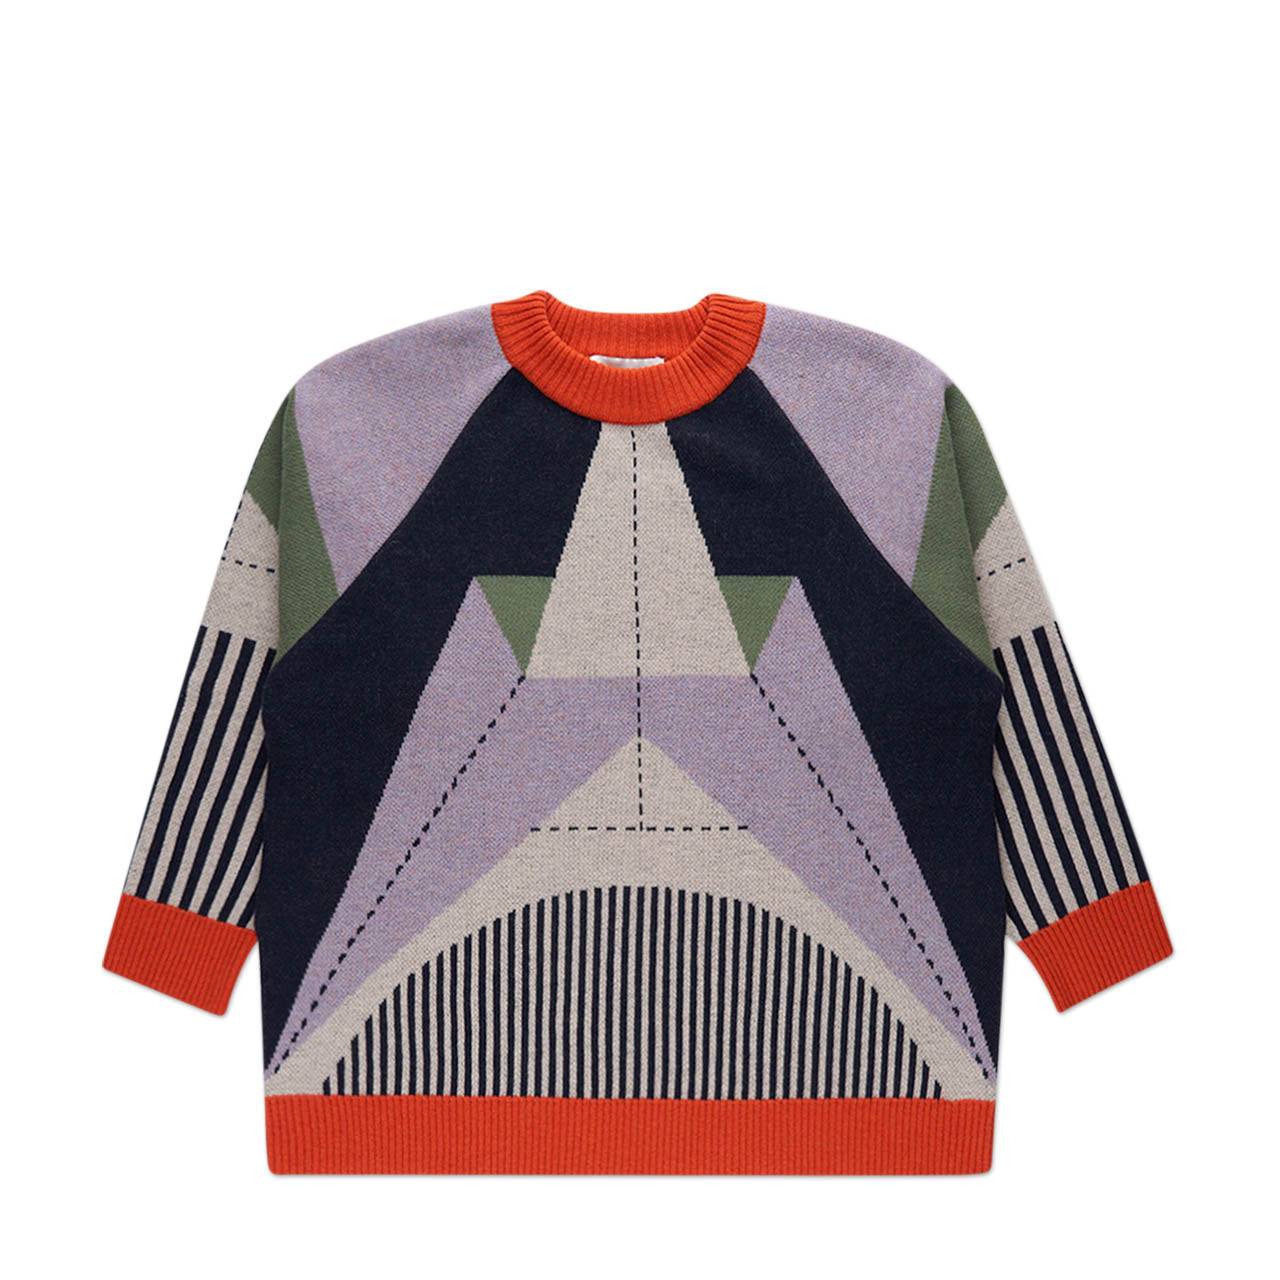 henrik vibskov paper plane sweatshirt (lavender)